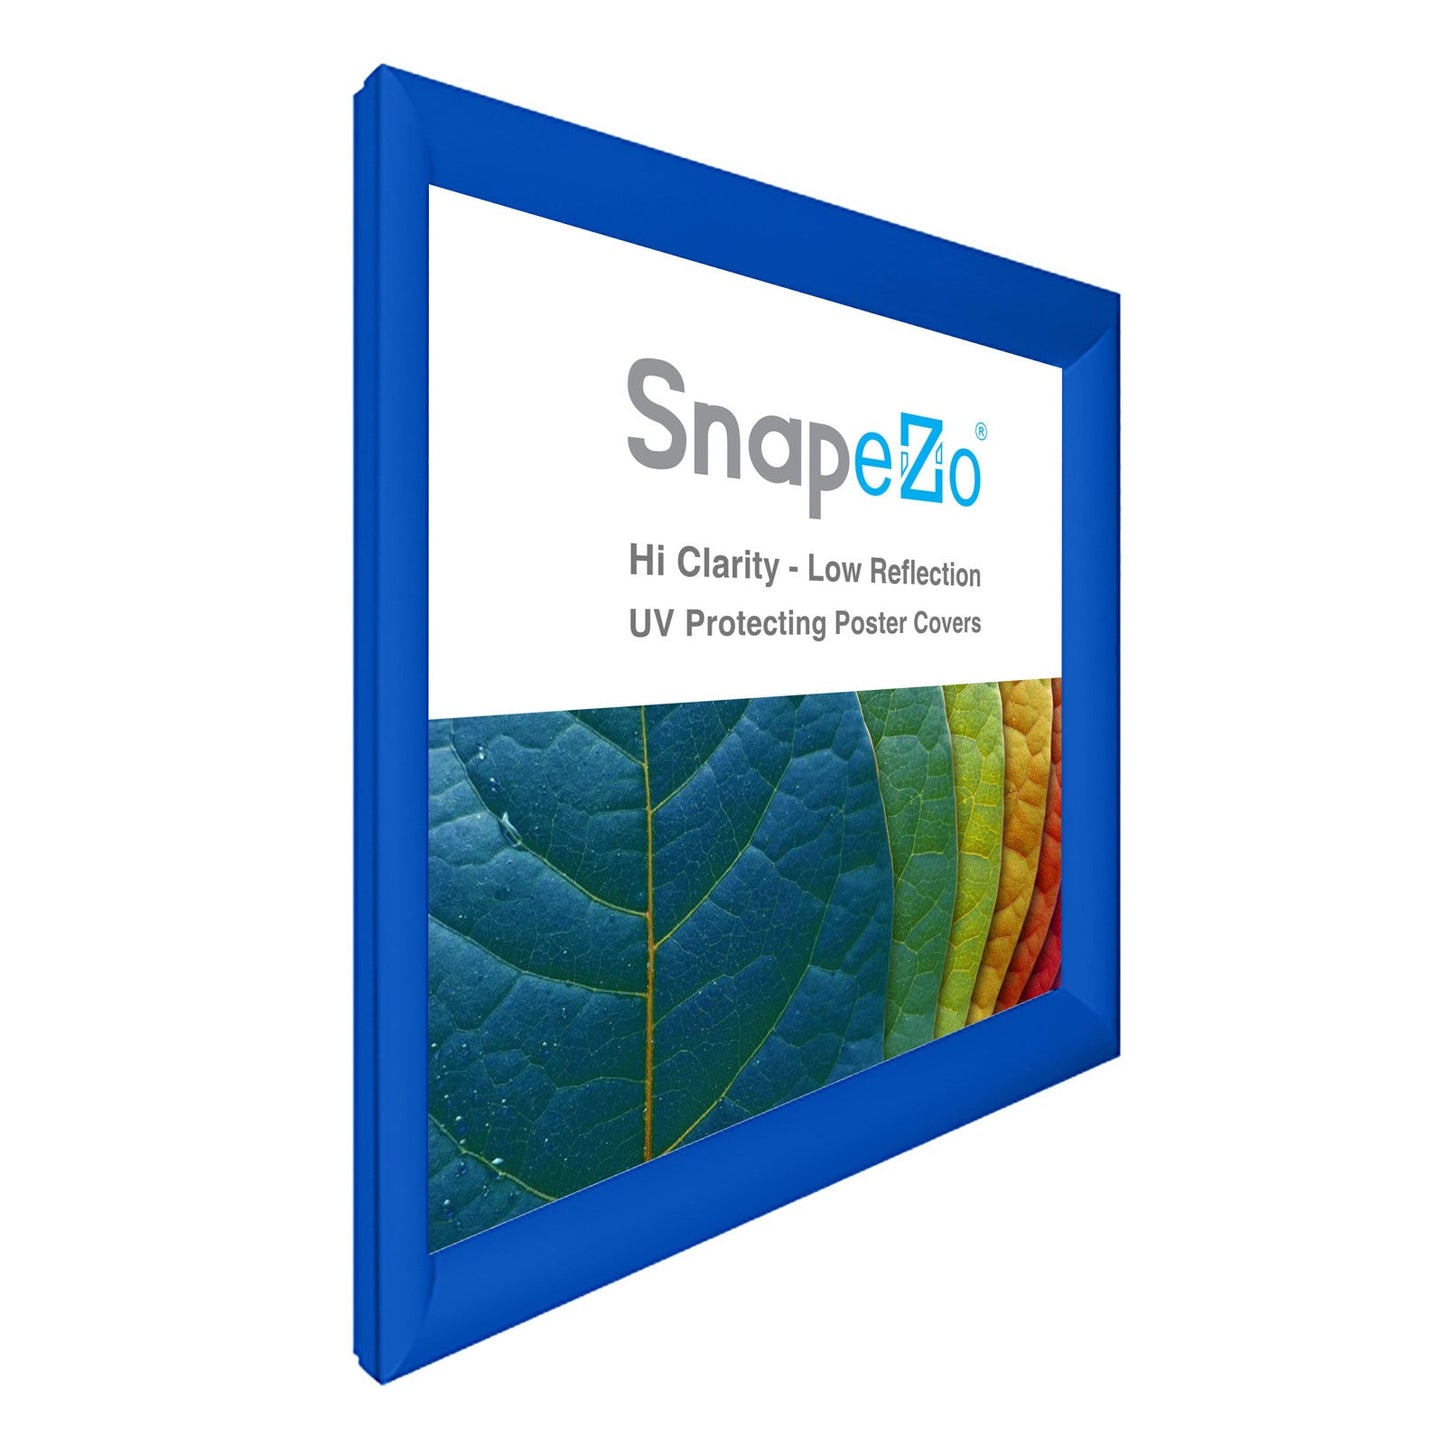 25x25 Blue SnapeZo® Snap Frame - 1.2" Profile